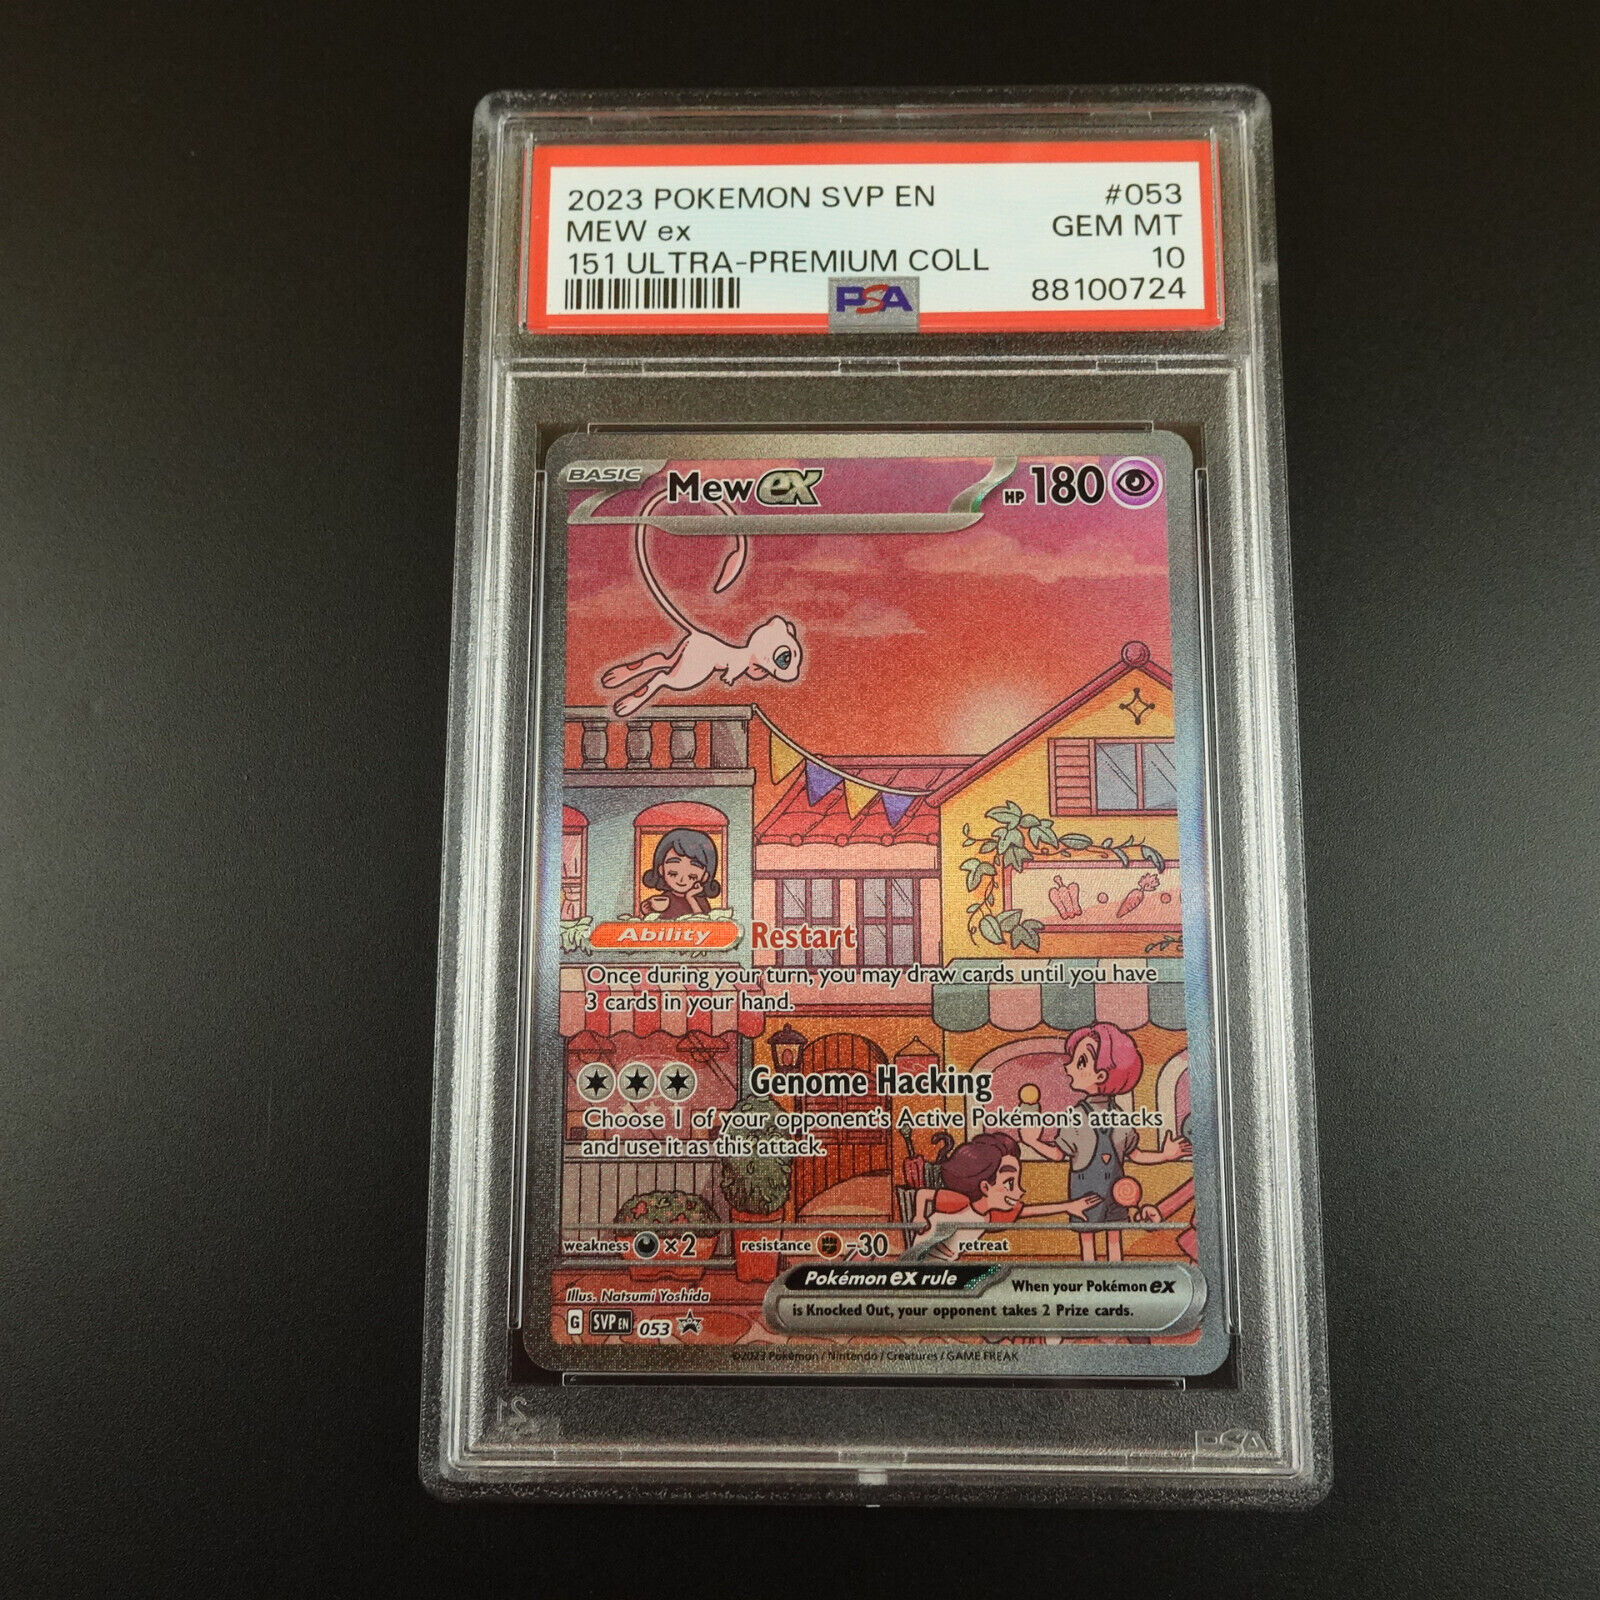 PSA 10 Mew ex SVP 053 Promo 151 Ultra Premium Collection Graded Pokemon Card